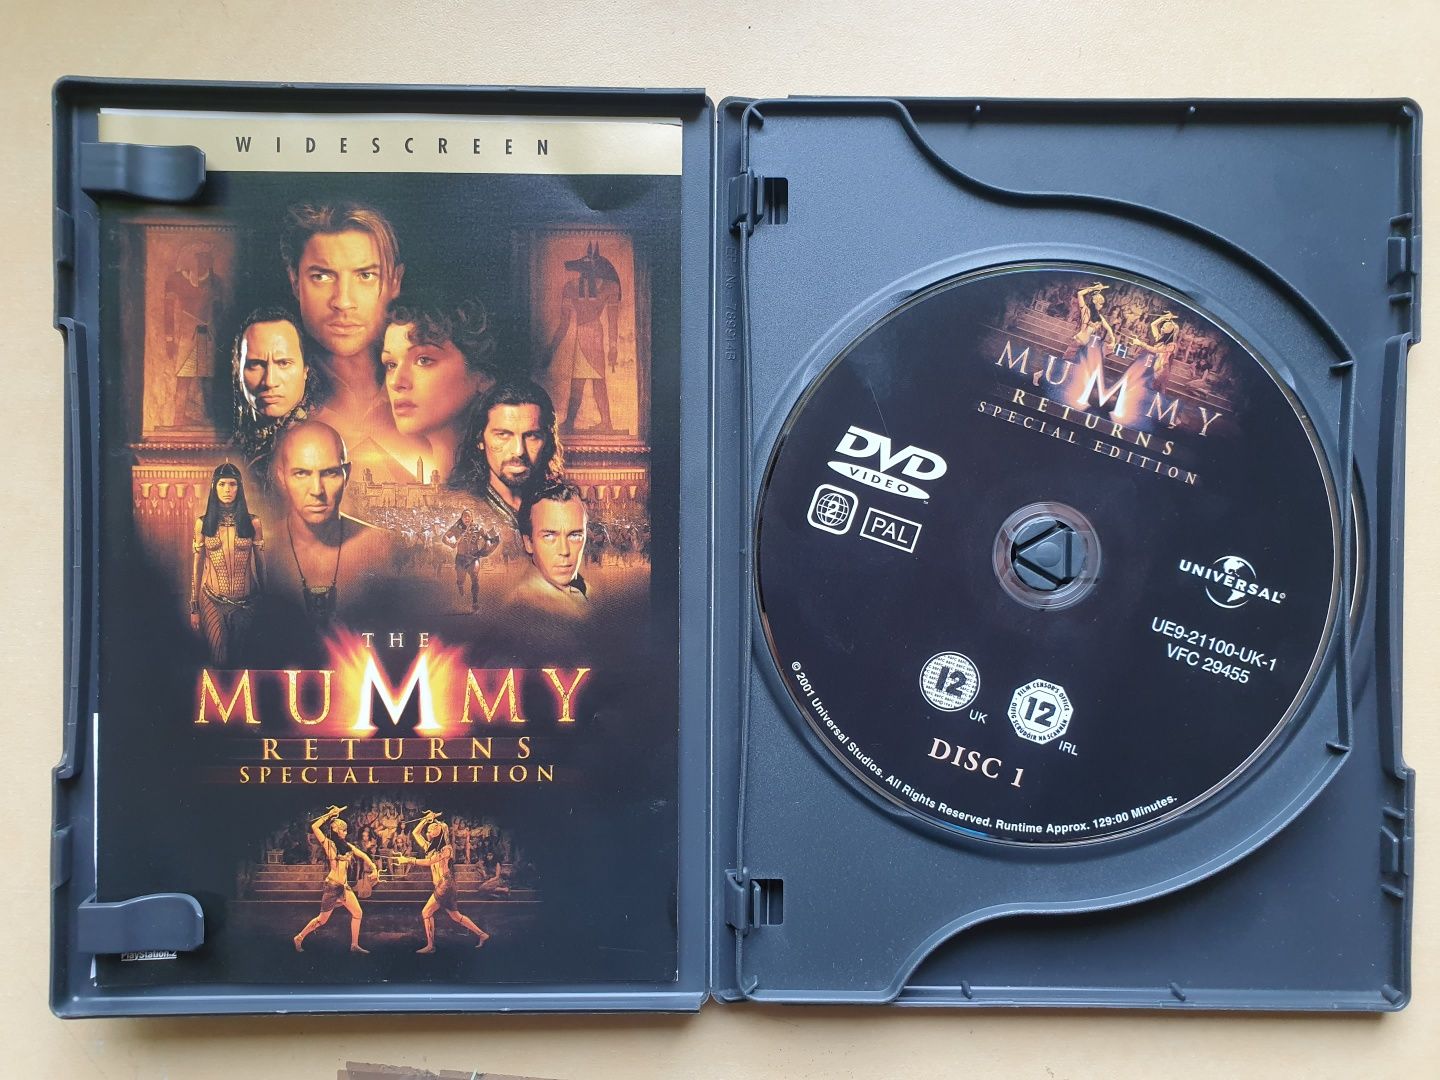 Film DVD The Mummy mumia Fraser Weisz 2 disc special edition